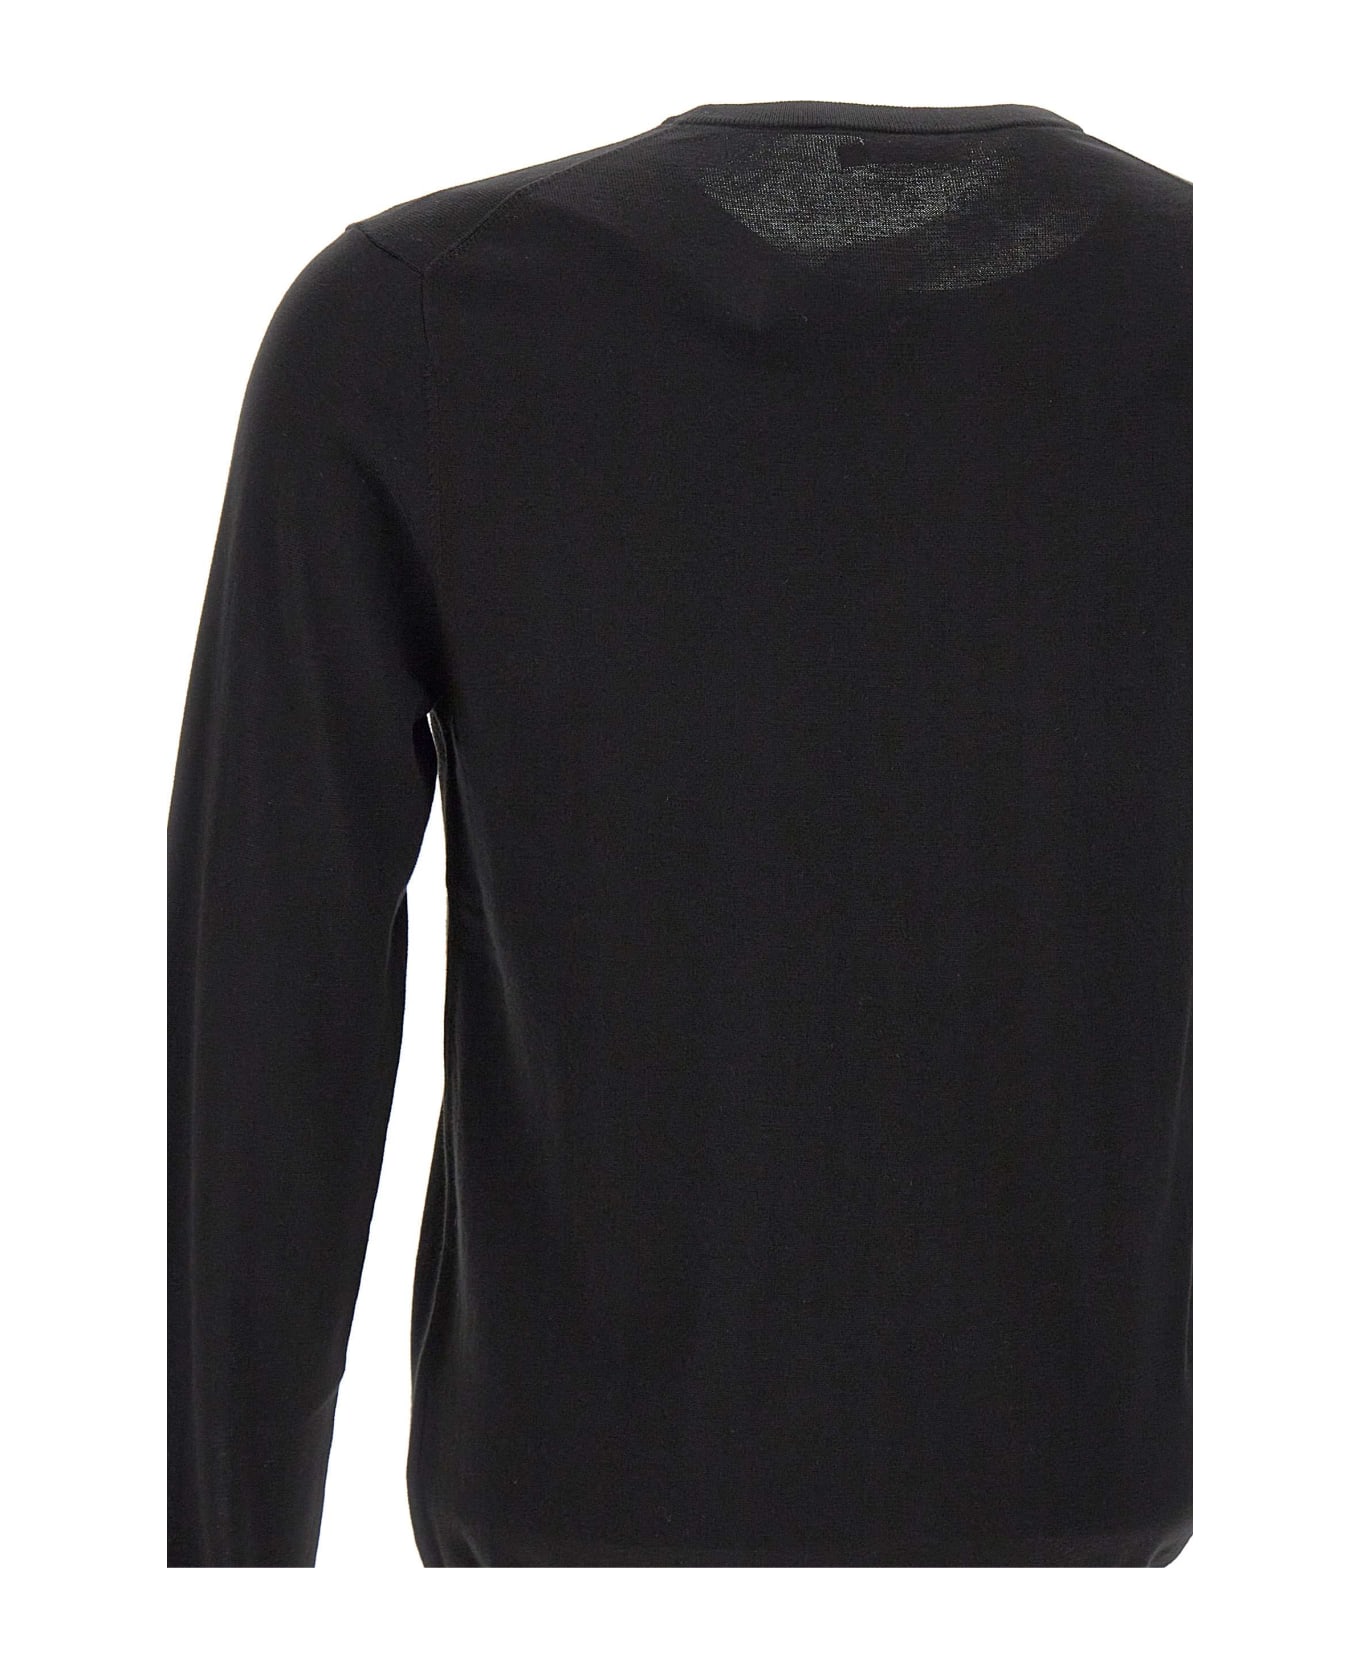 Sun 68 "solid" Cotton Sweater - BLACK ニットウェア